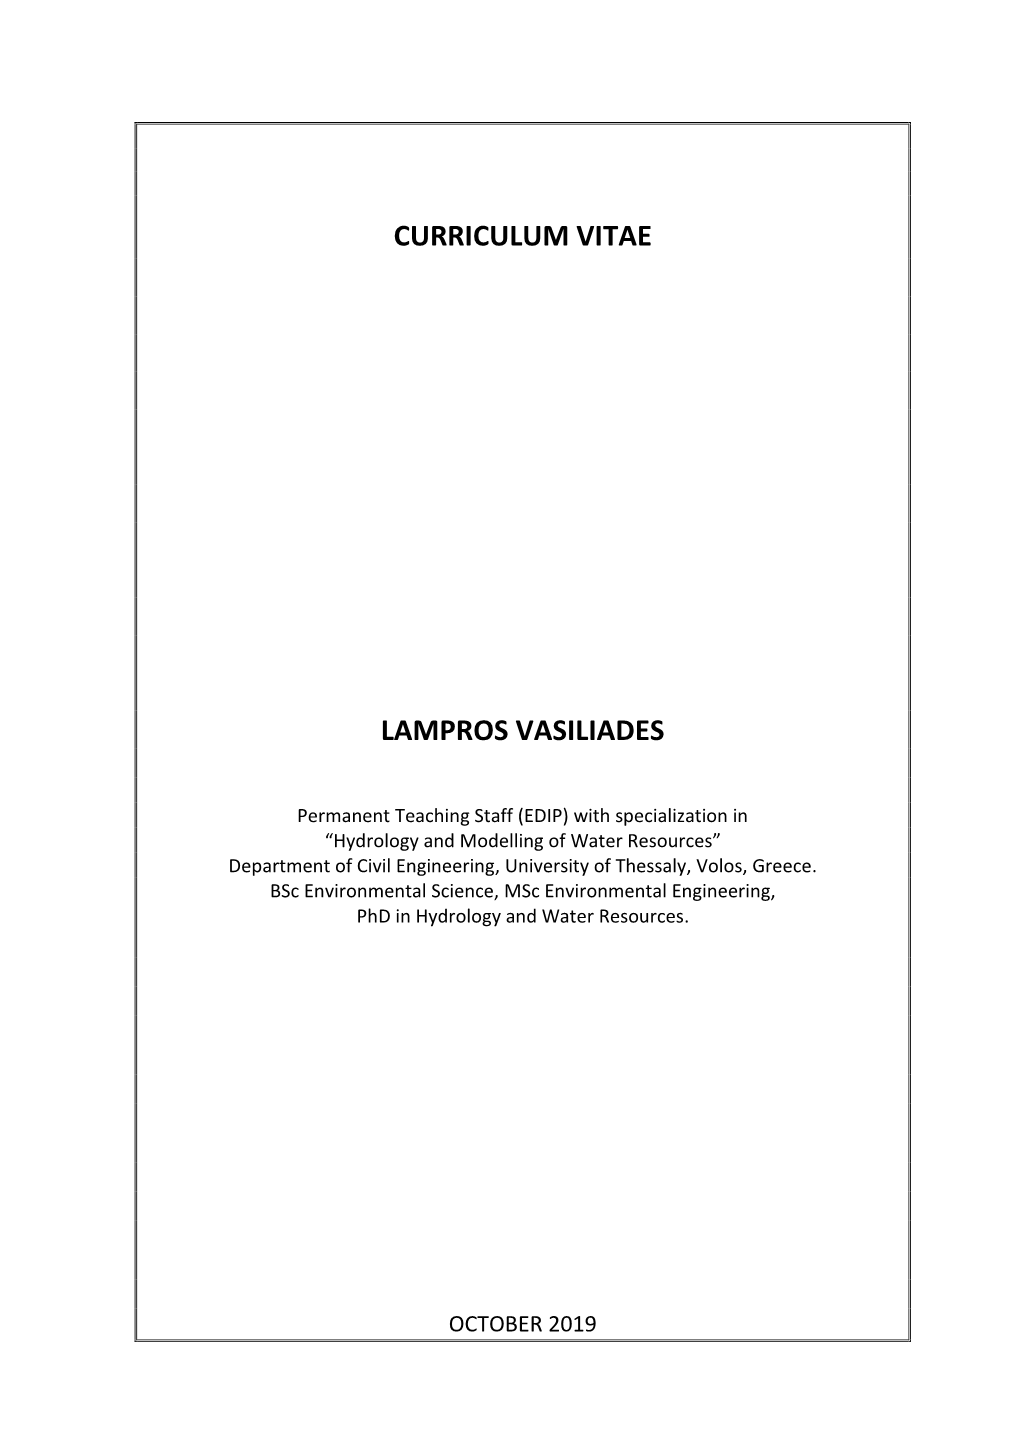 Lampros Vasiliades CV